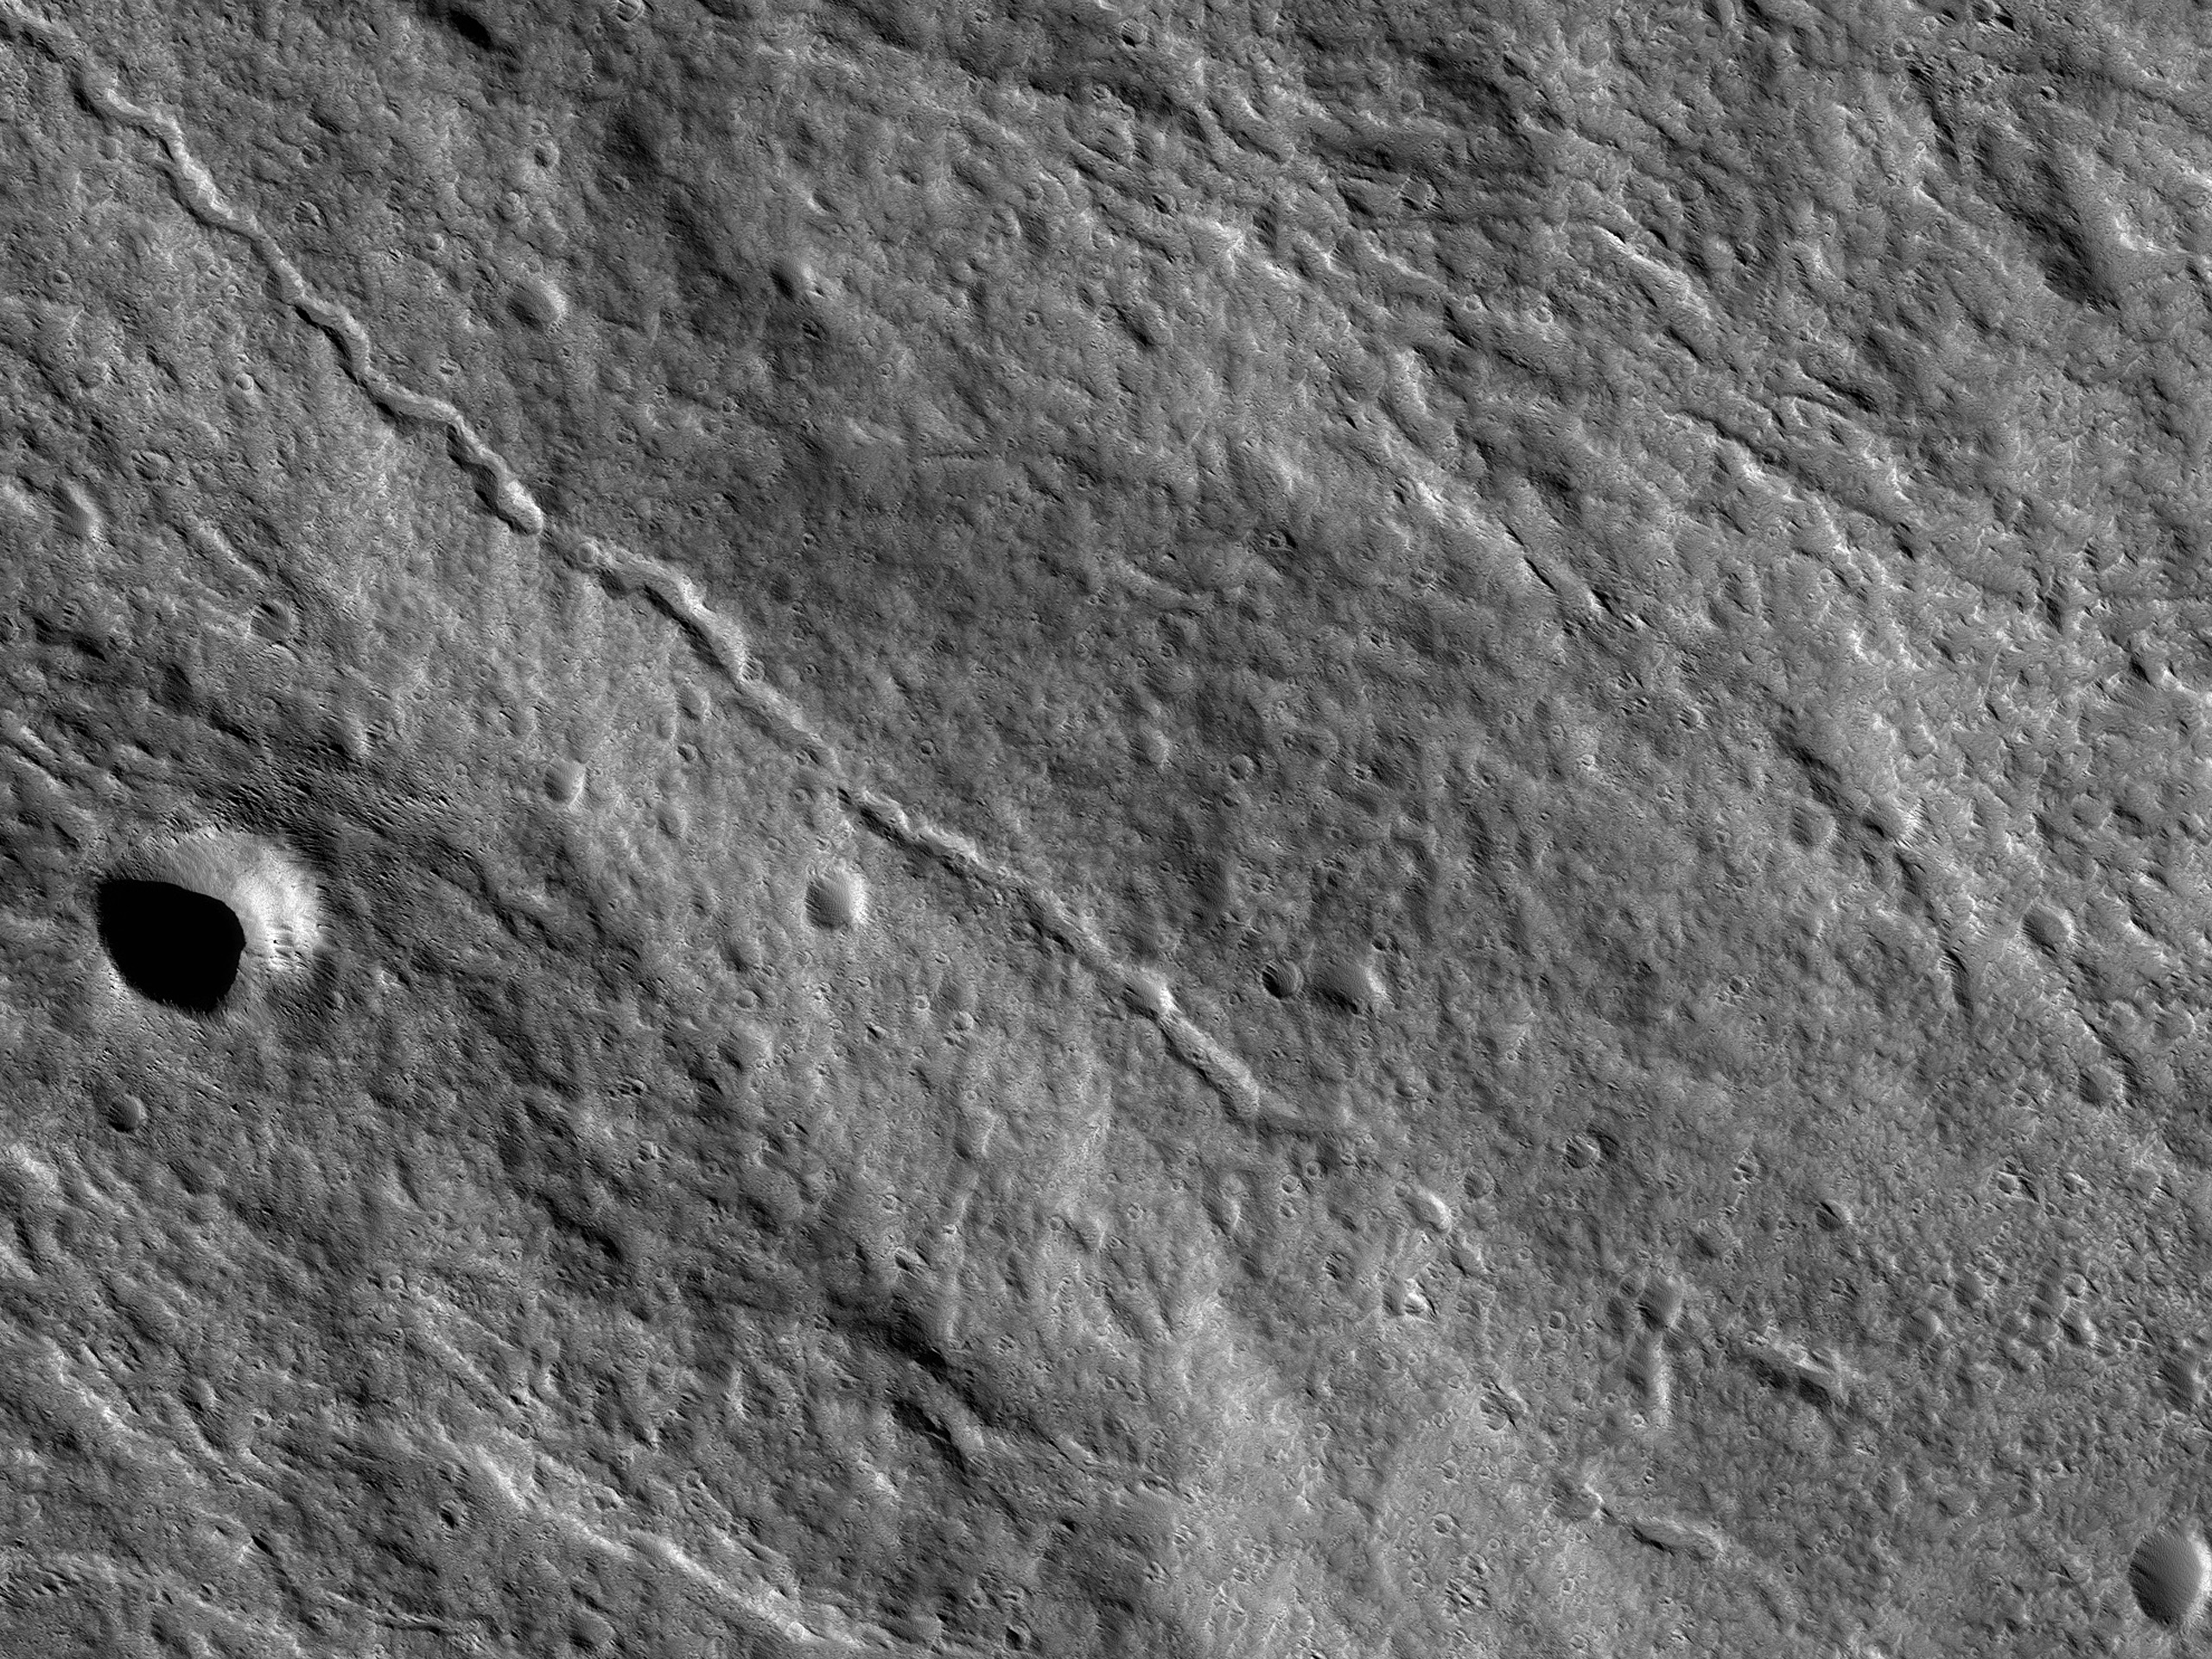 A Channel Cutting through Lava Flows on Olympus Mons